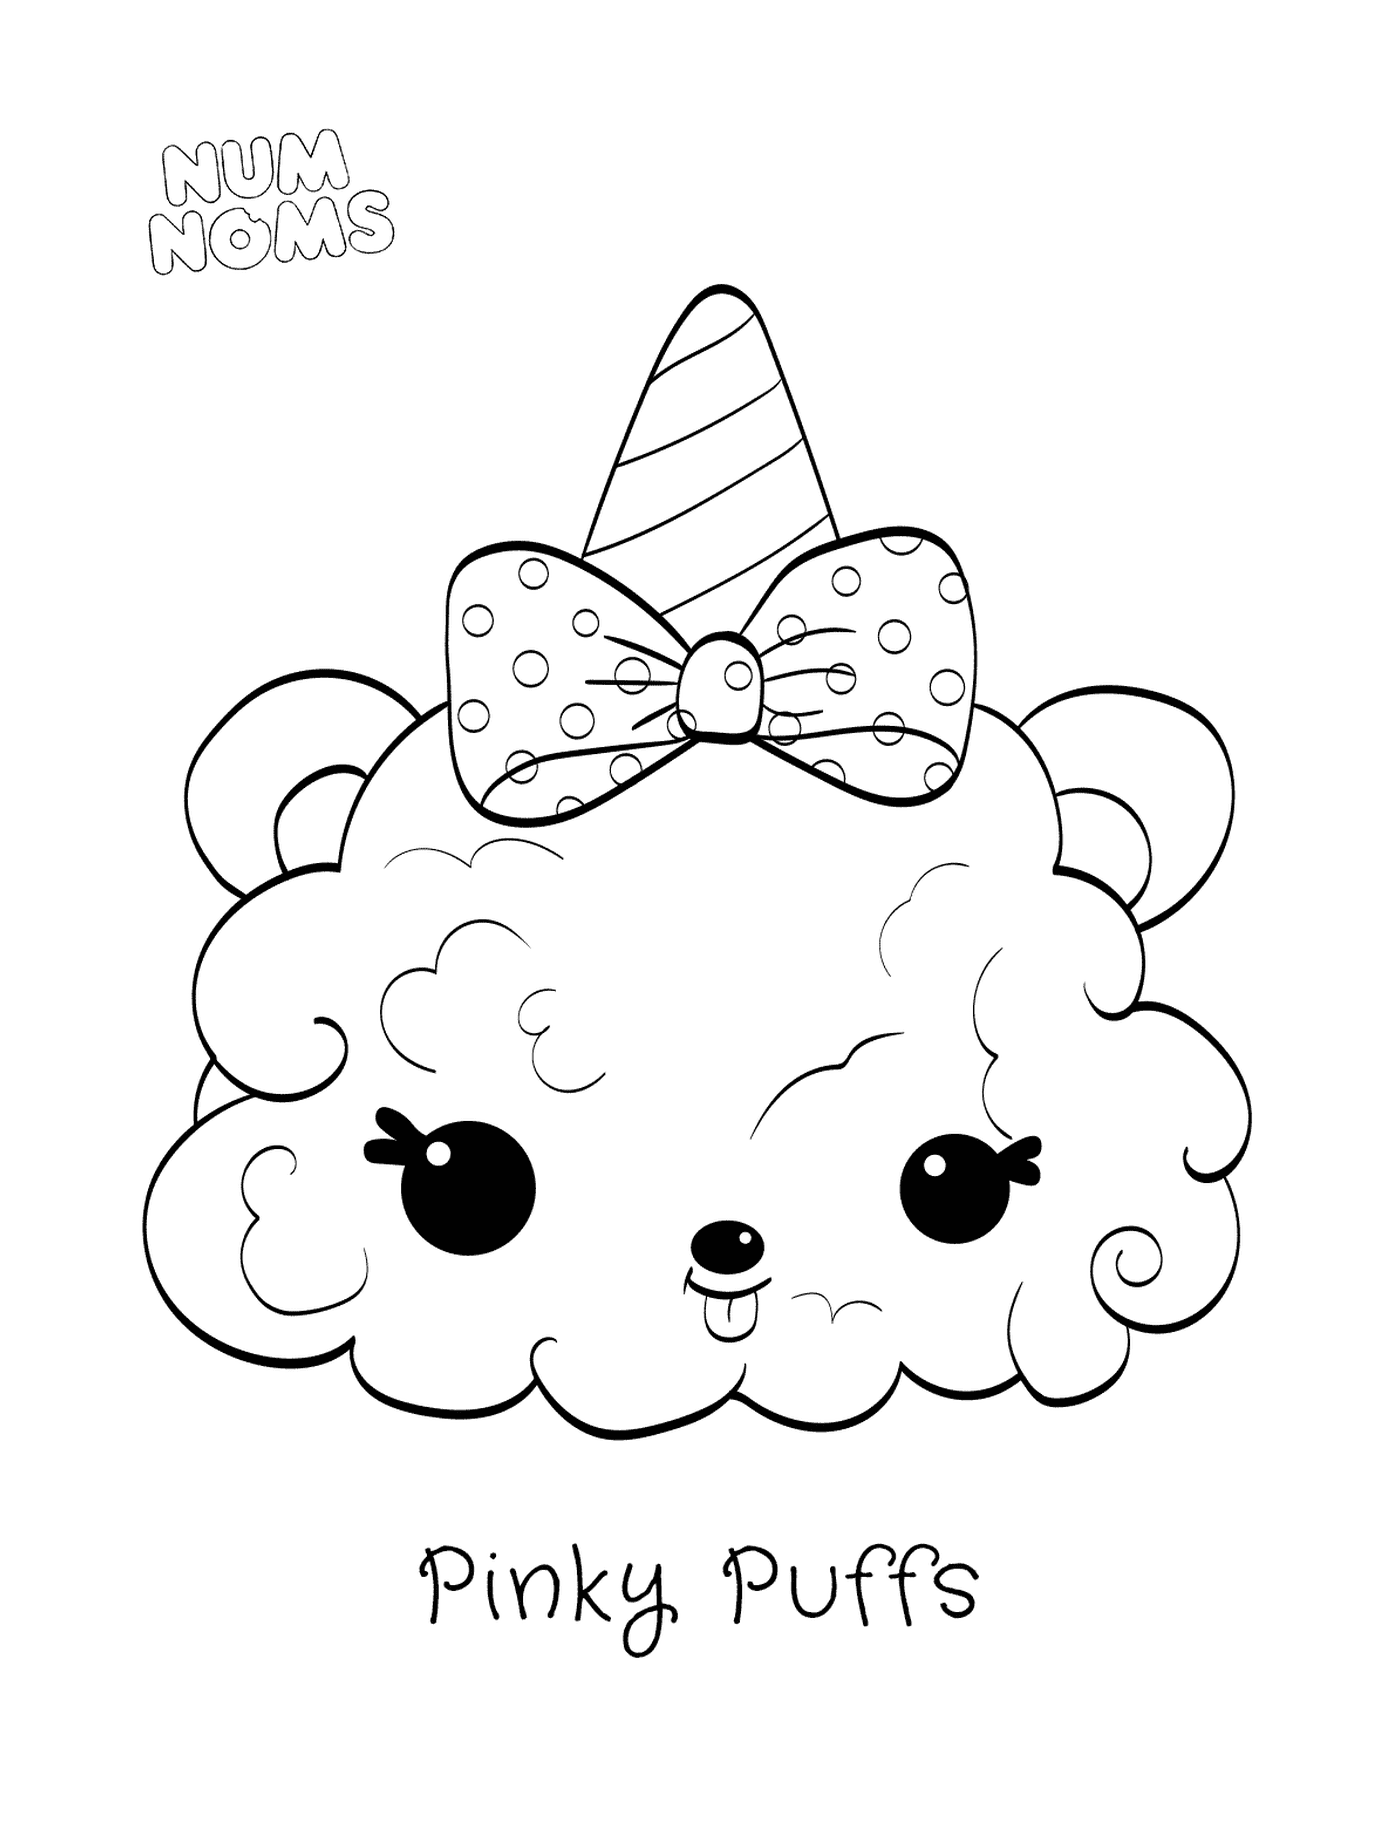  Pinky Puffs por Nombres Numéricos Serie 2 